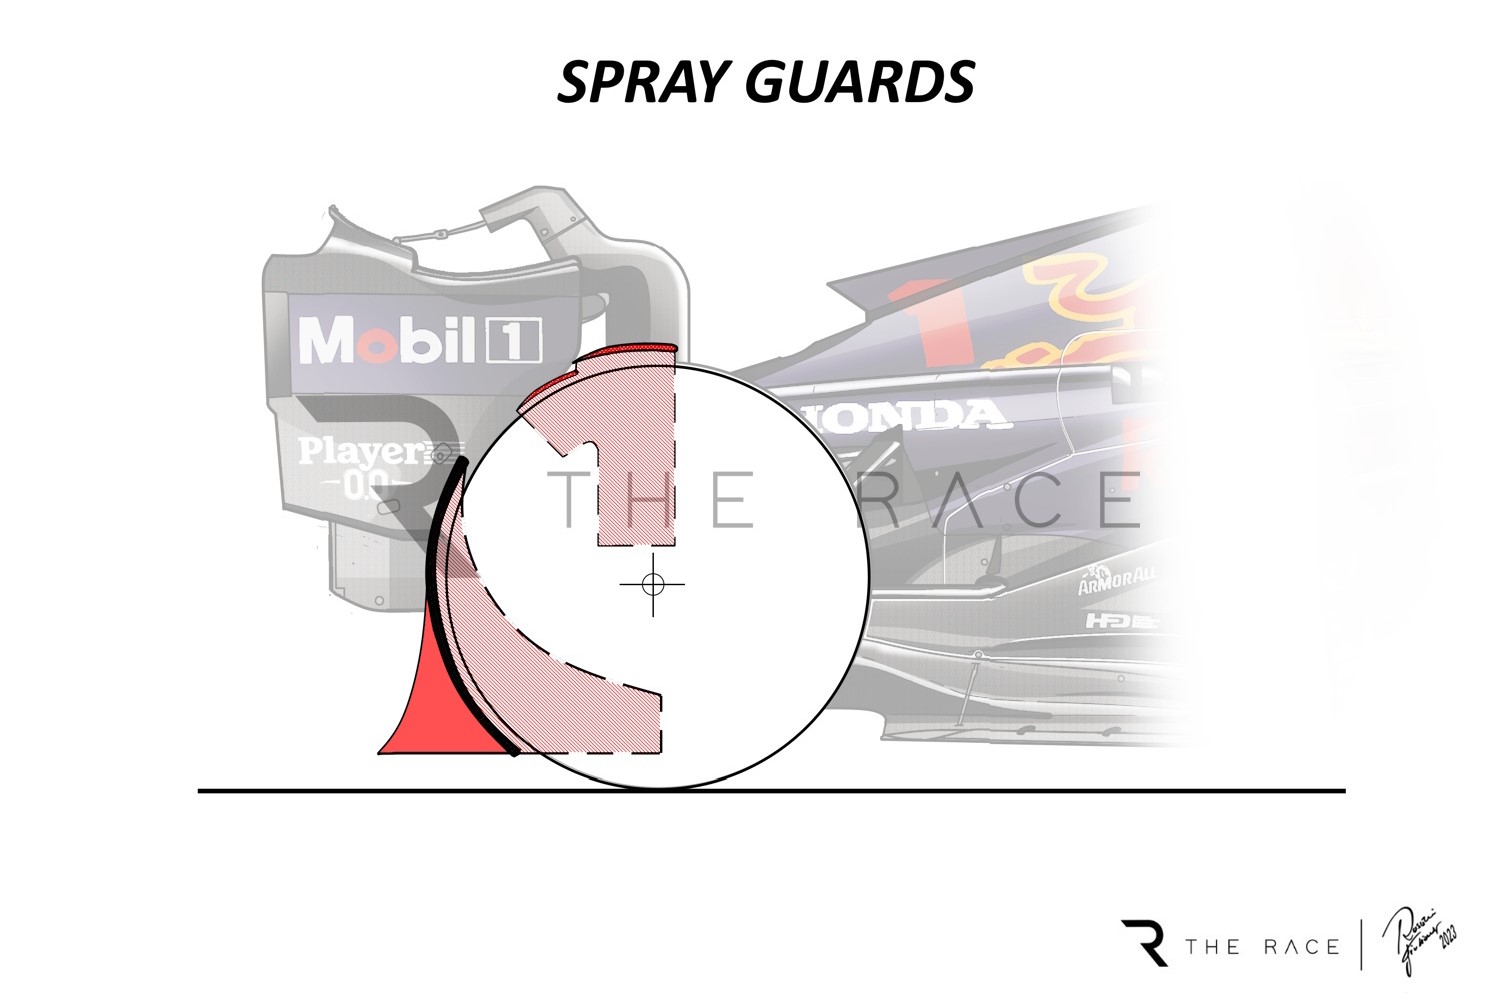 gary anderson’s ideas for f1 spray guard design